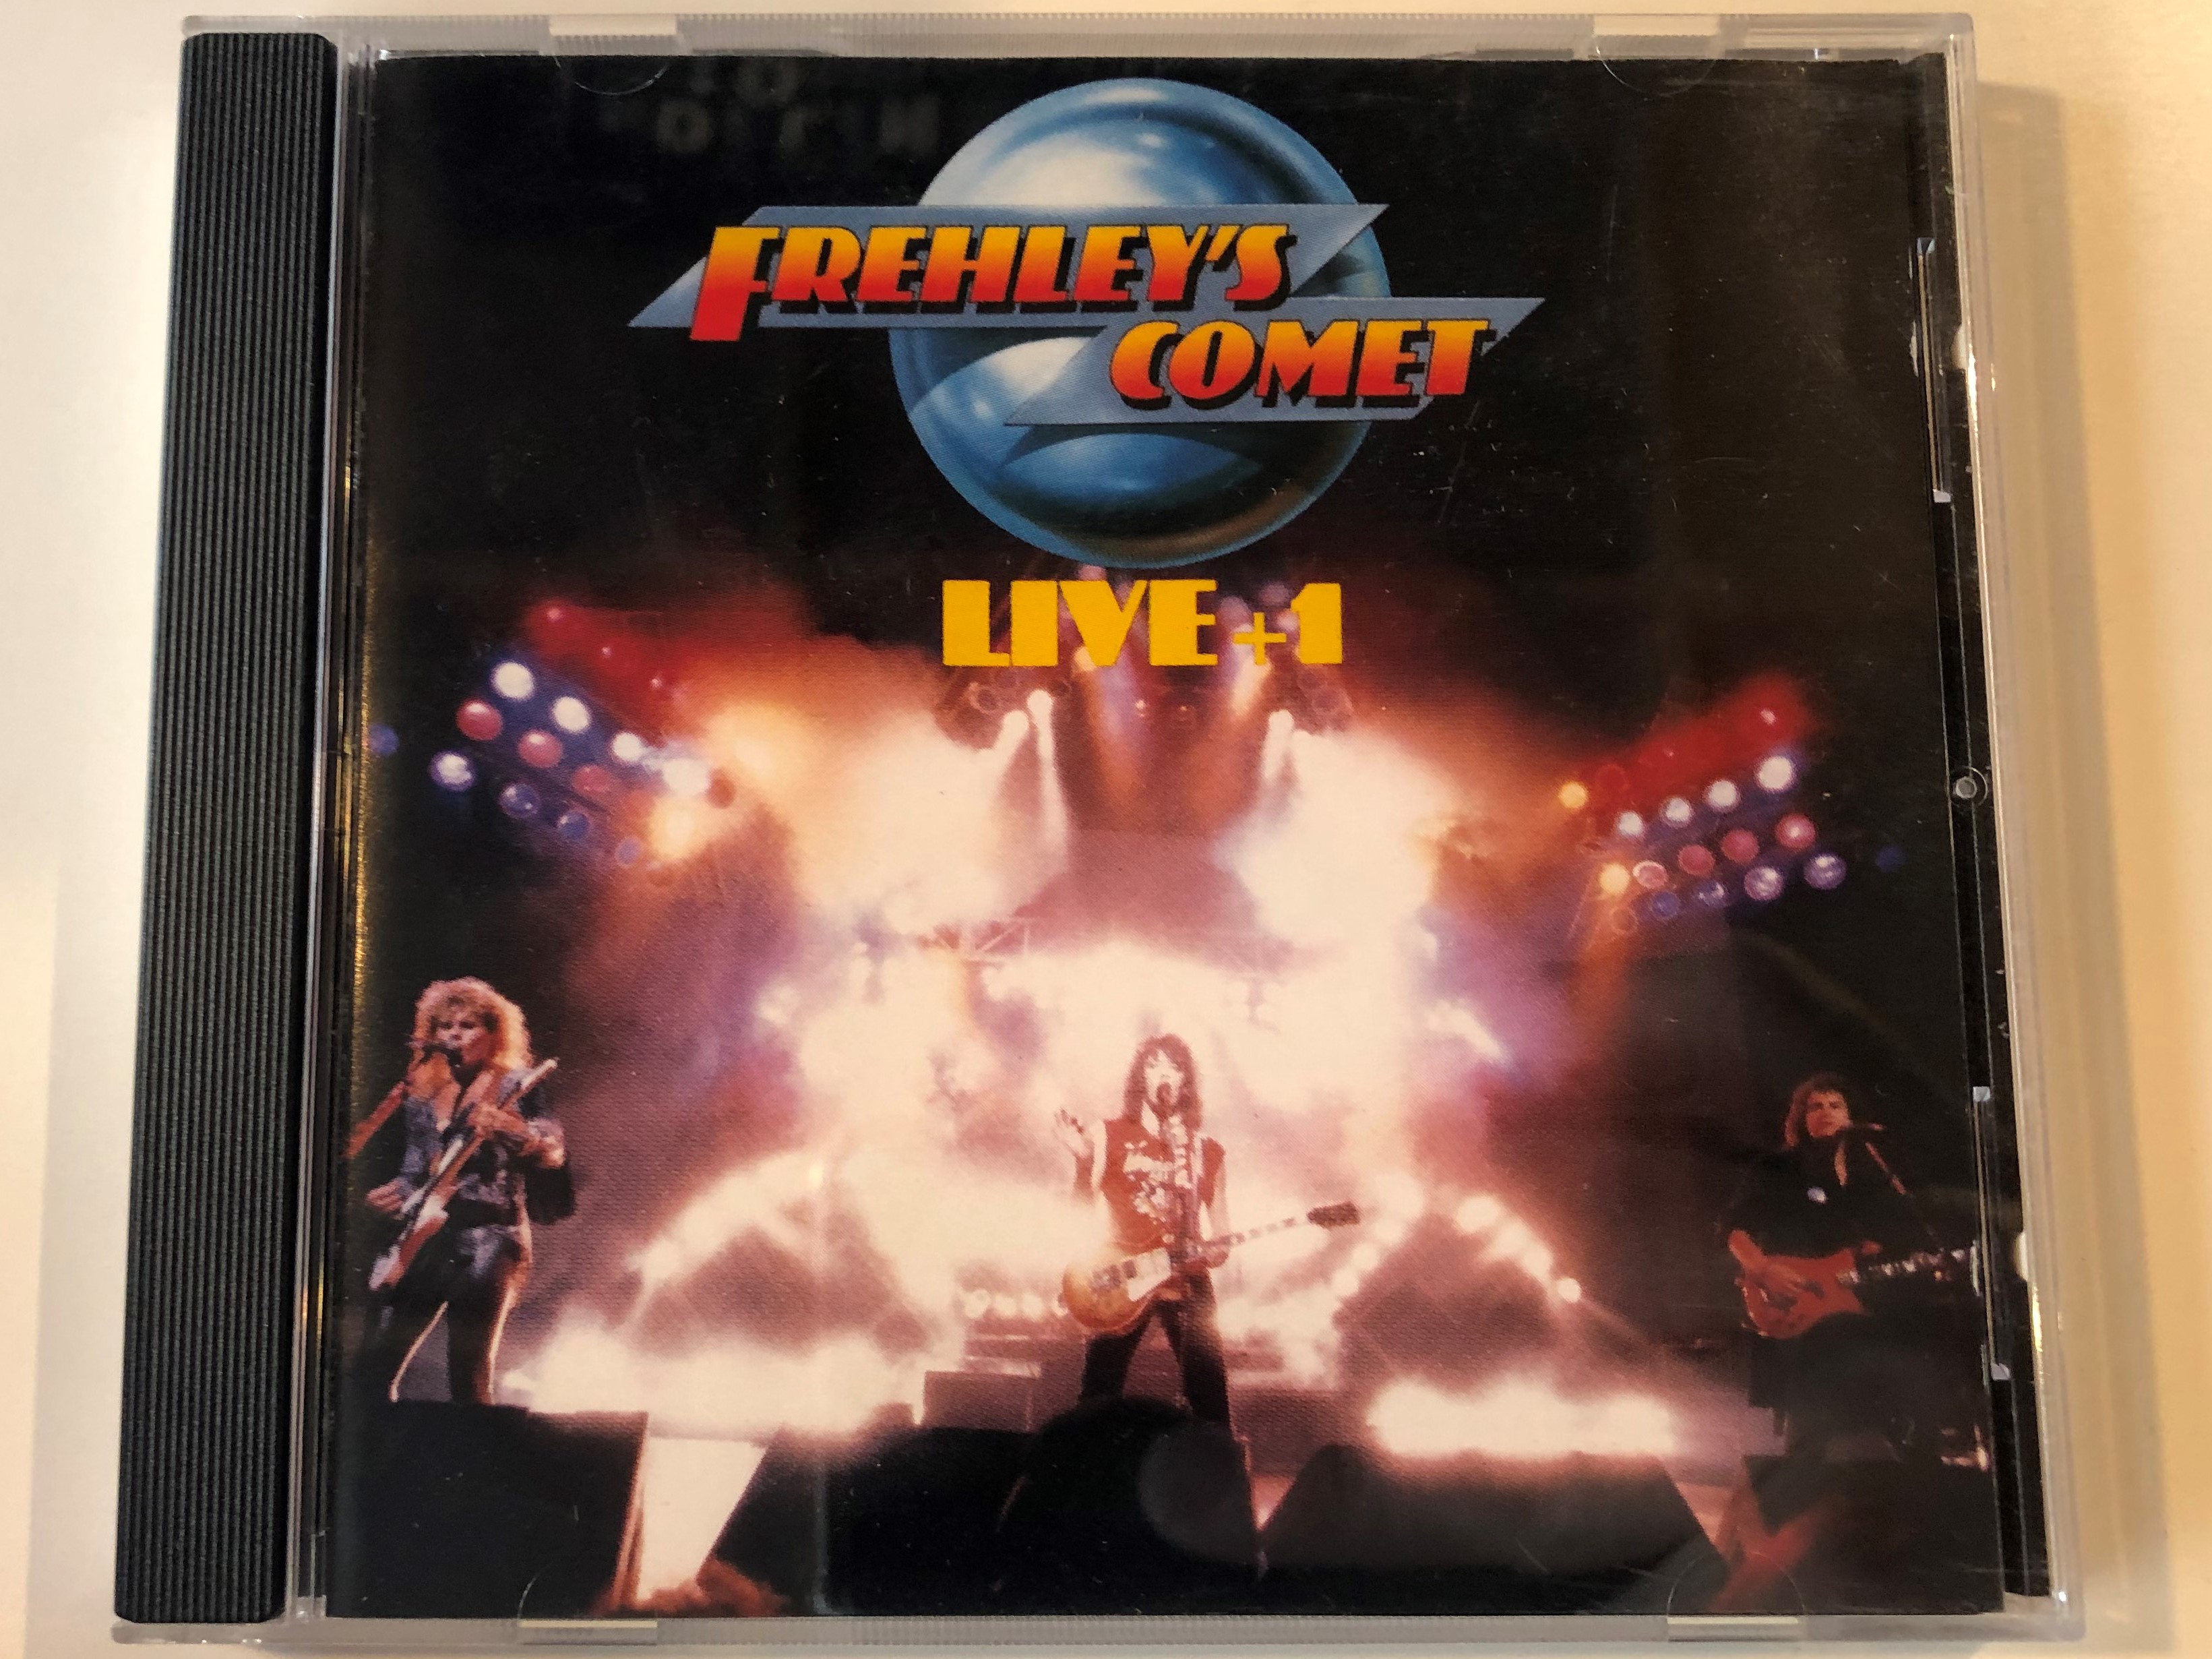 frehley-s-comet-live-1-megaforce-worldwide-audio-cd-1988-7567-81826-2-1-.jpg